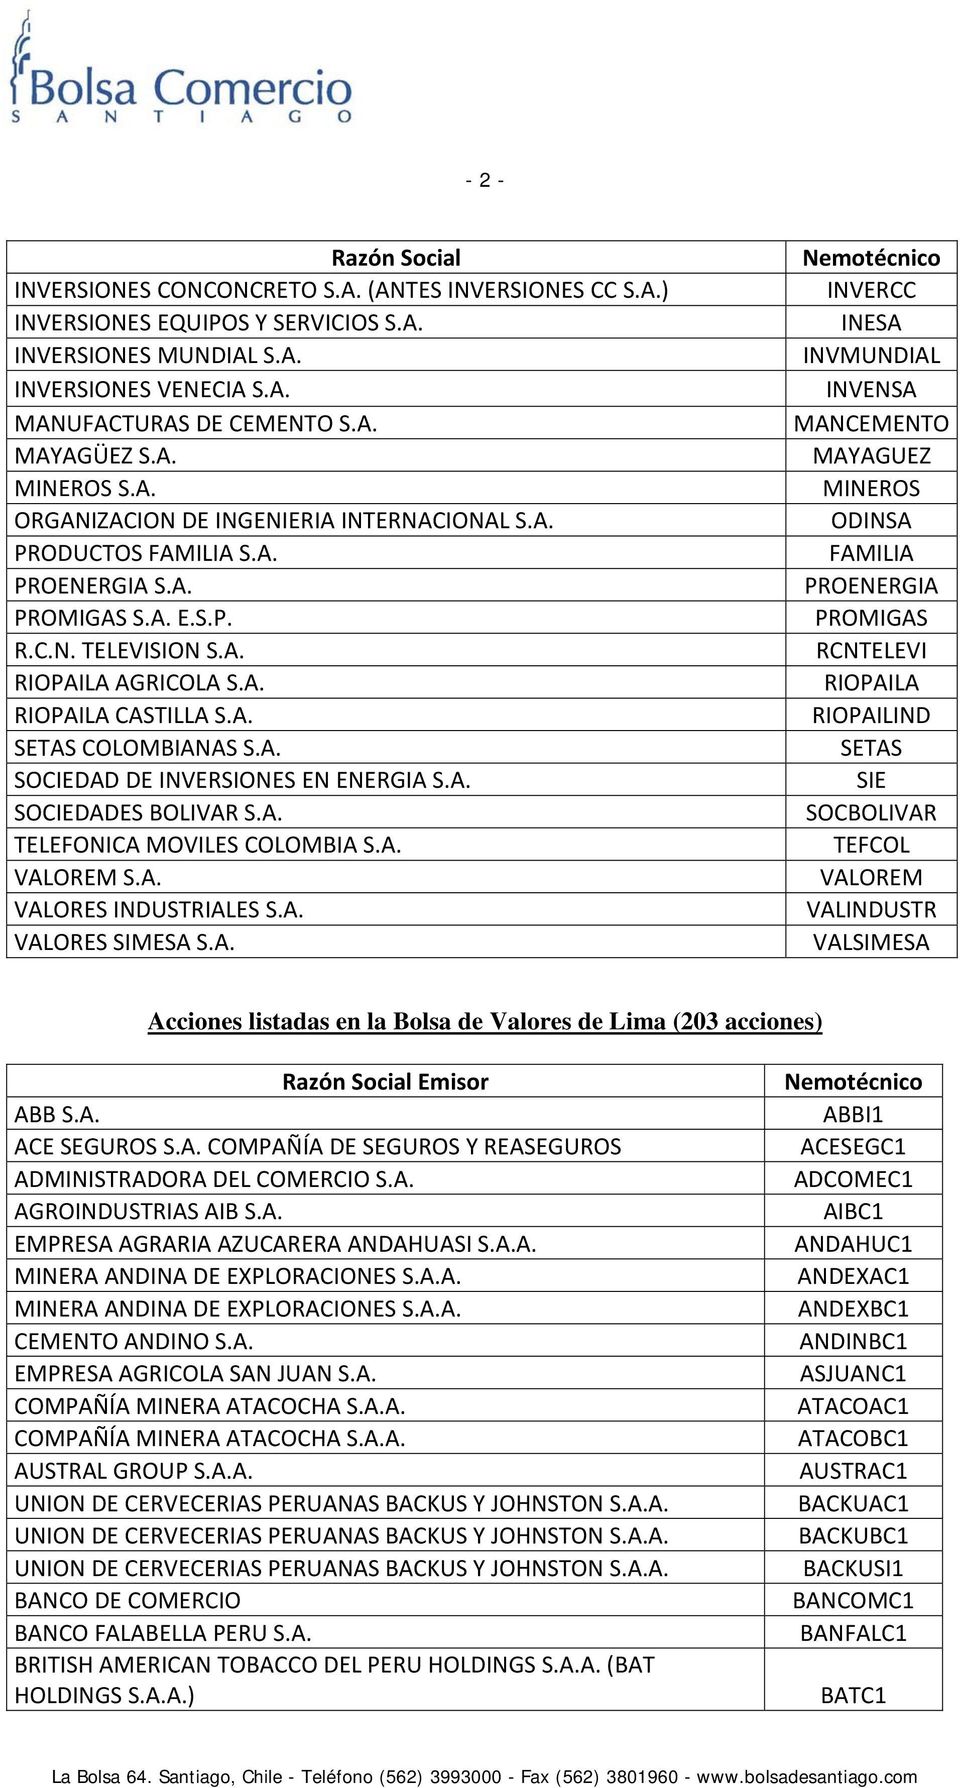 A. SOCIEDAD DE INVERSIONES EN ENERGIA S.A. SOCIEDADES BOLIVAR S.A. TELEFONICA MOVILES COLOMBIA S.A. VALOREM S.A. VALORES INDUSTRIALES S.A. VALORES SIMESA S.A. INVERCC INESA INVMUNDIAL INVENSA